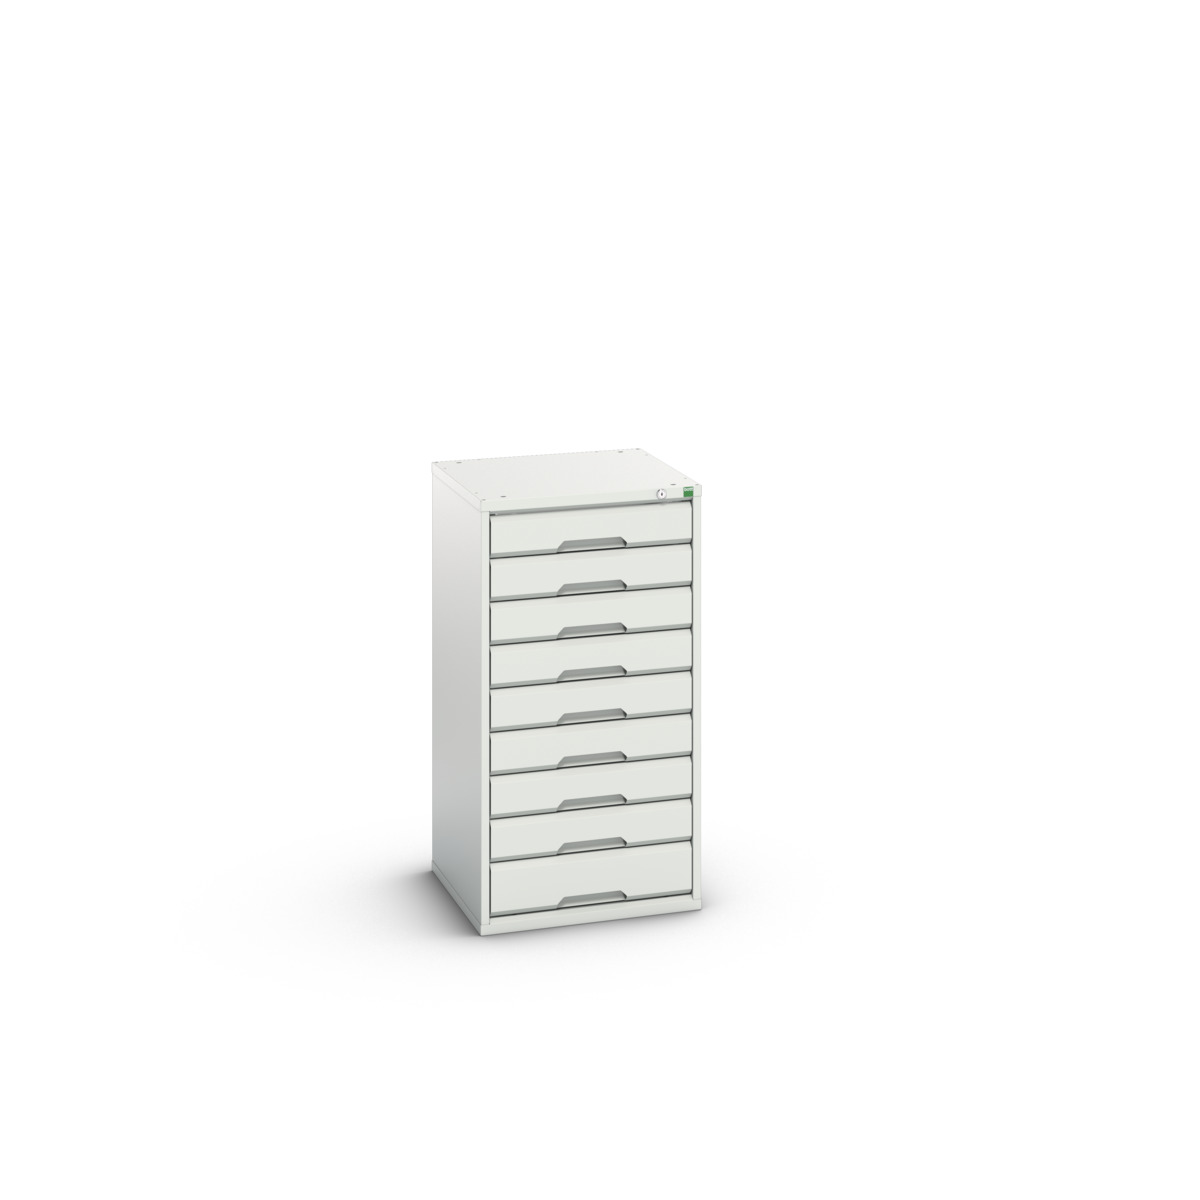 16925357.16 - verso drawer cabinet